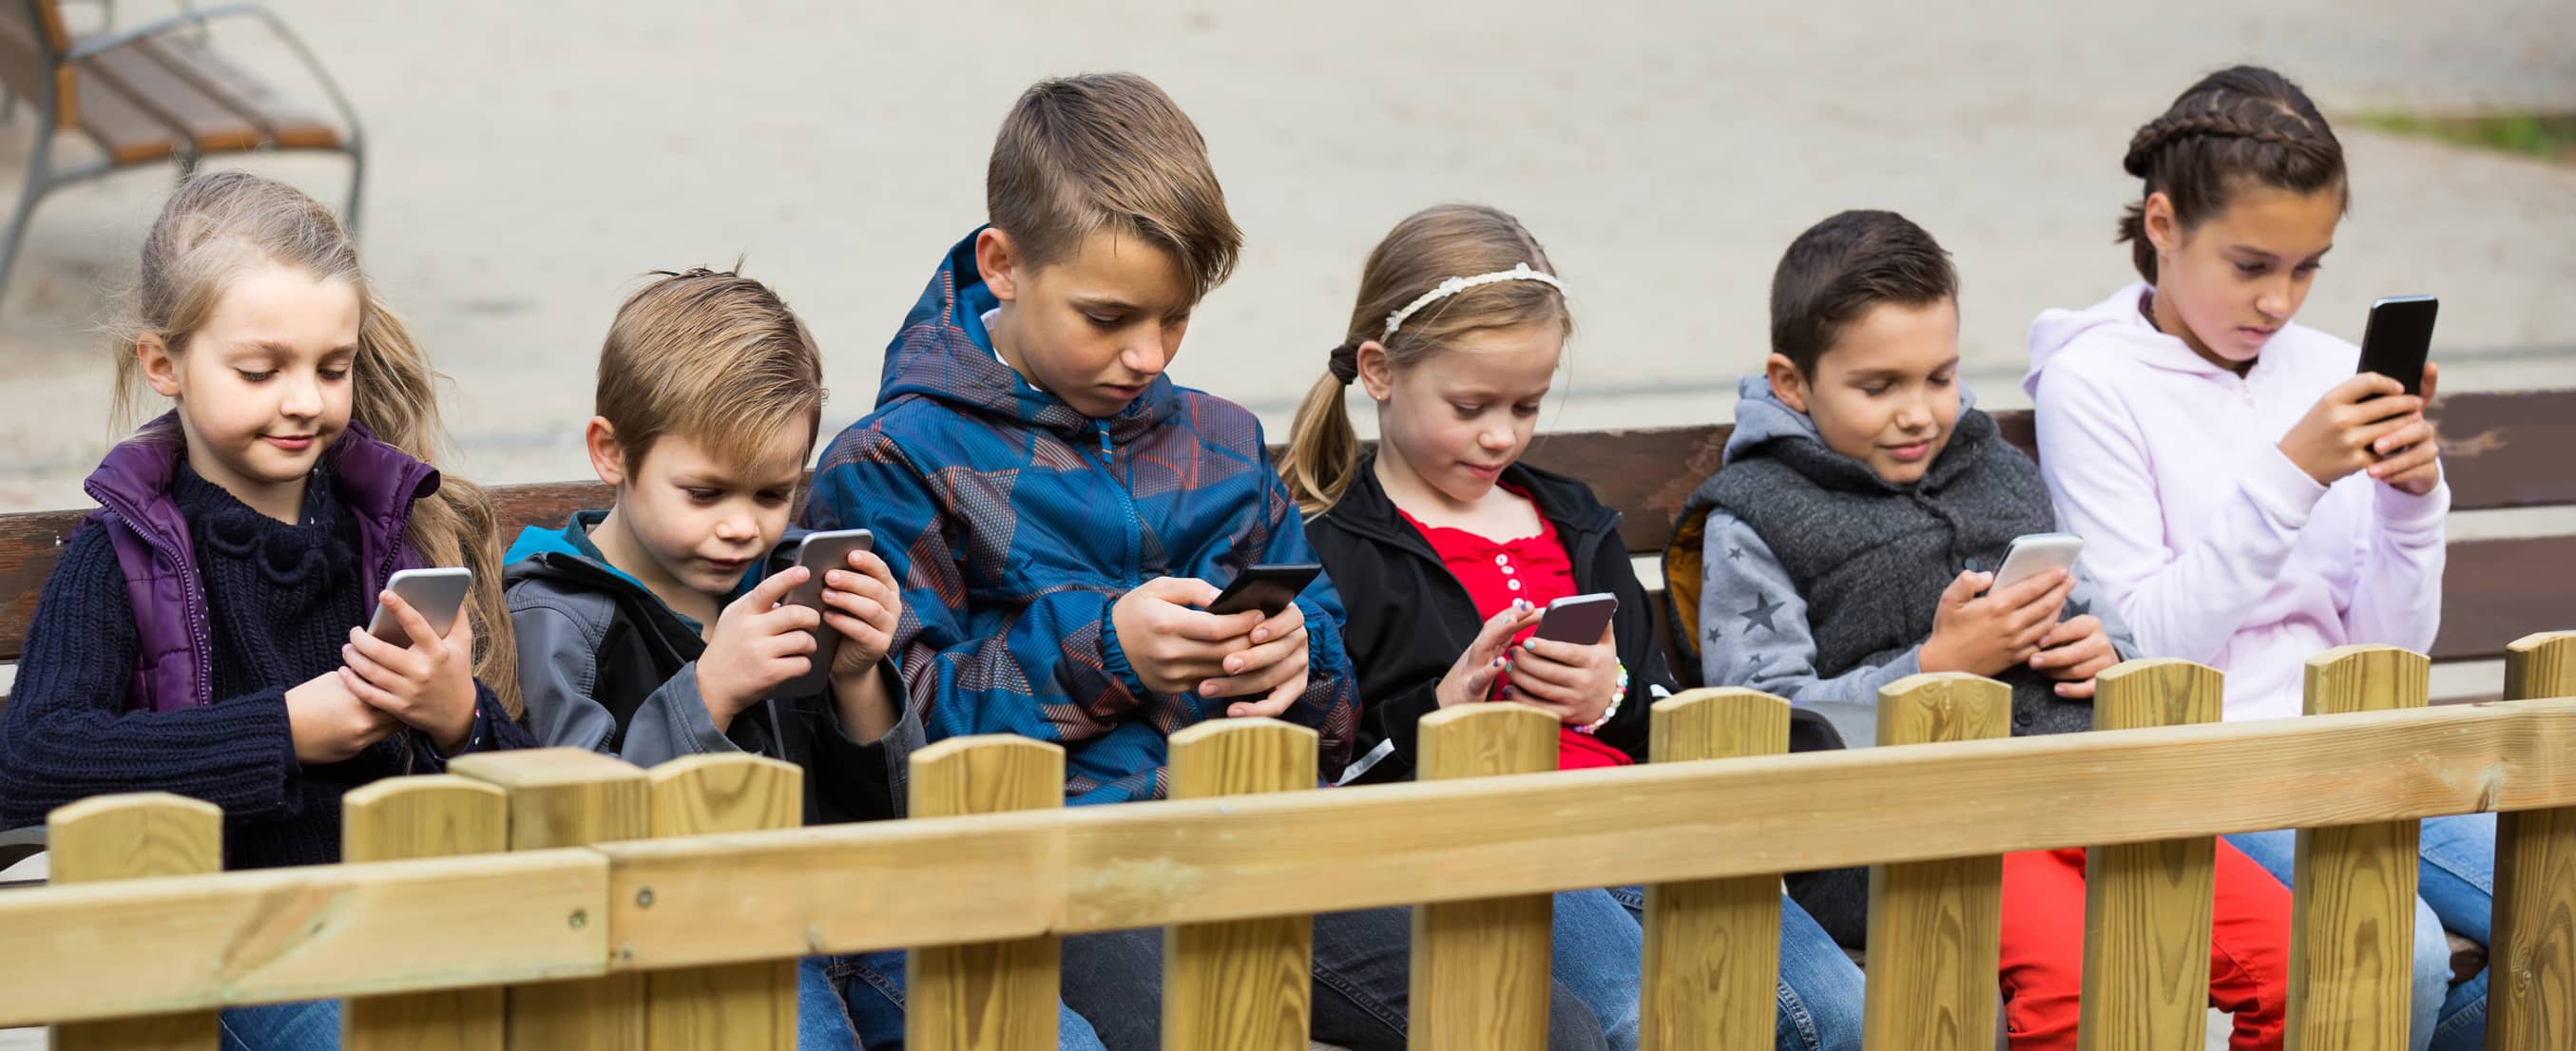 Multiple kids on their phones illustrating tech addiction.